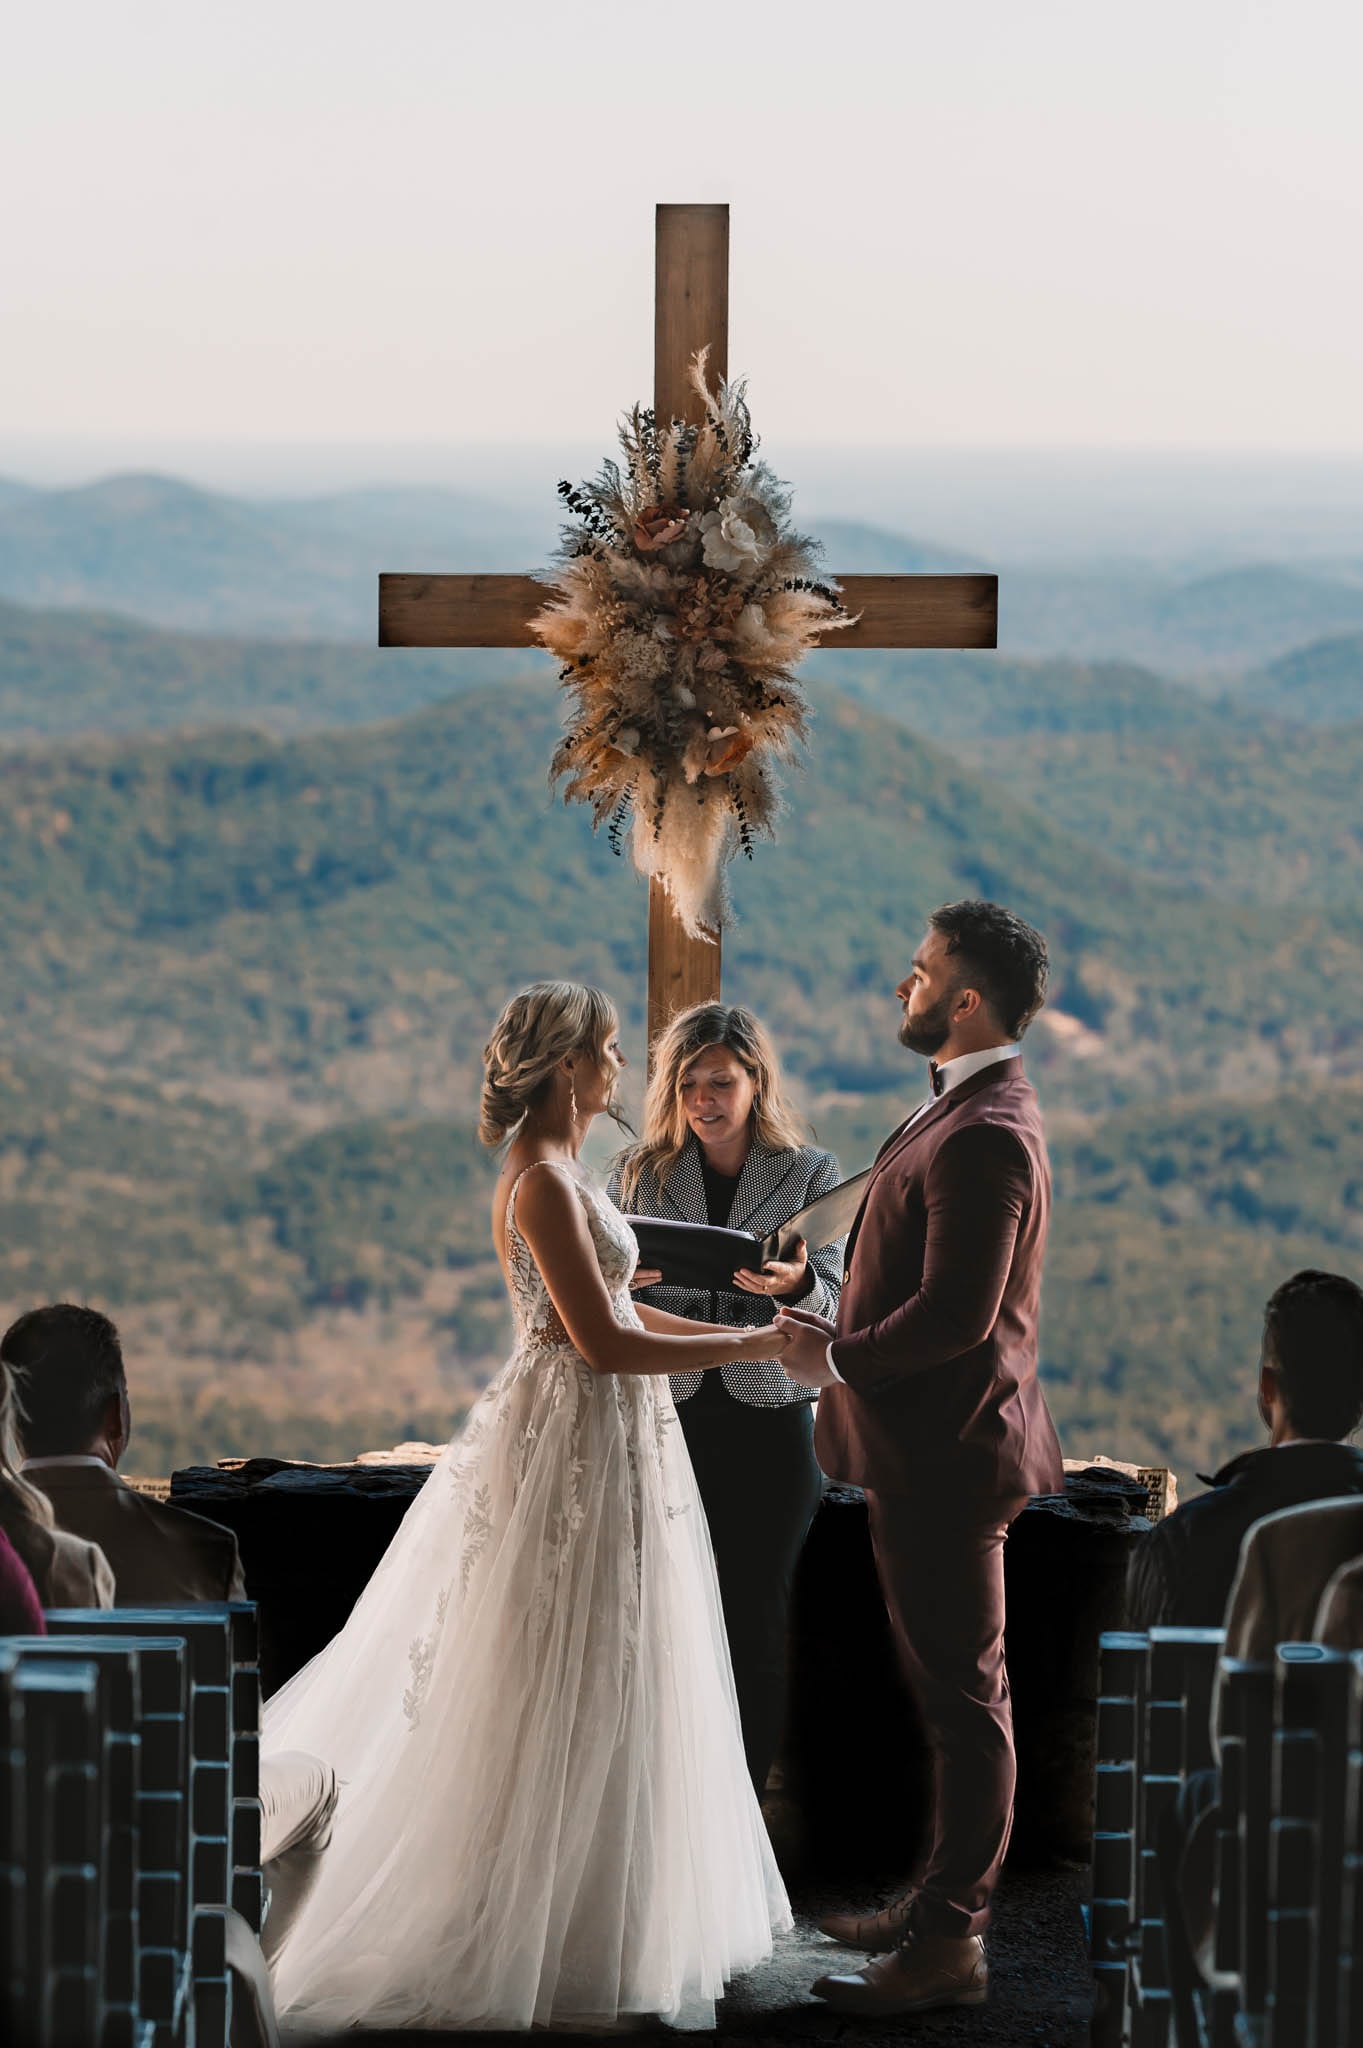 Pretty Place Chapel Wedding Guide - wildandlove.com